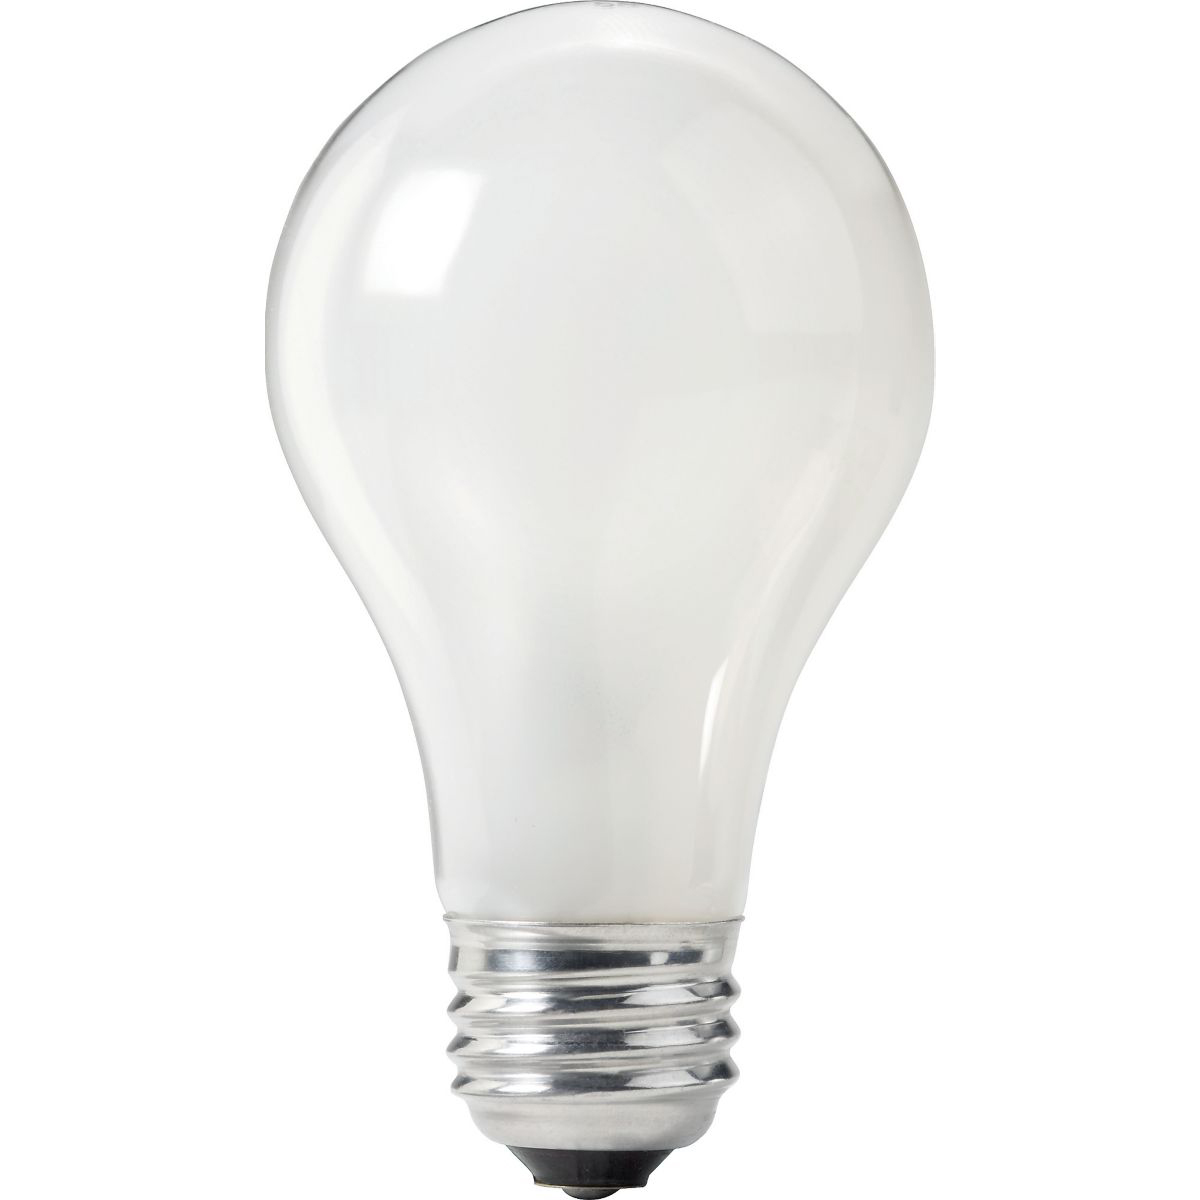 Rough Service Light Bulbs - 50W - 2 Pack